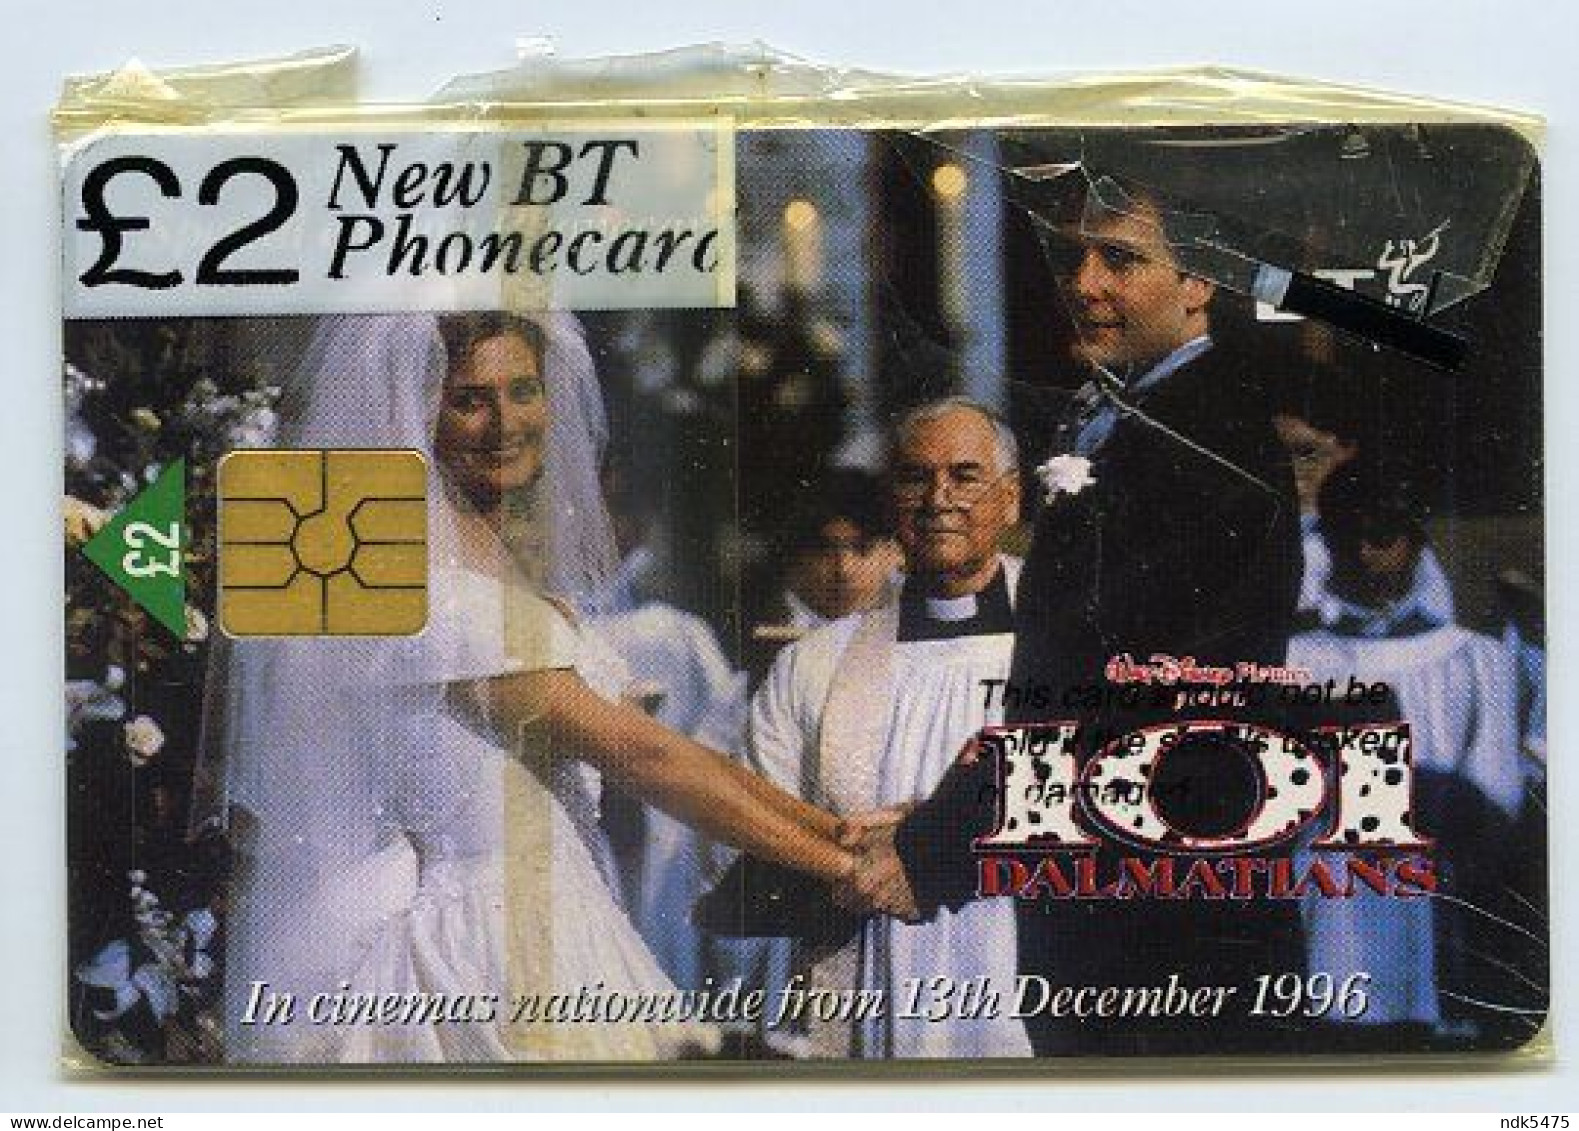 BT PHONECARD : 101 DALMATIONS - 1996 FILM : £2 / JOELY RICHARDSON, JEFF DANIELS - BT Promozionali